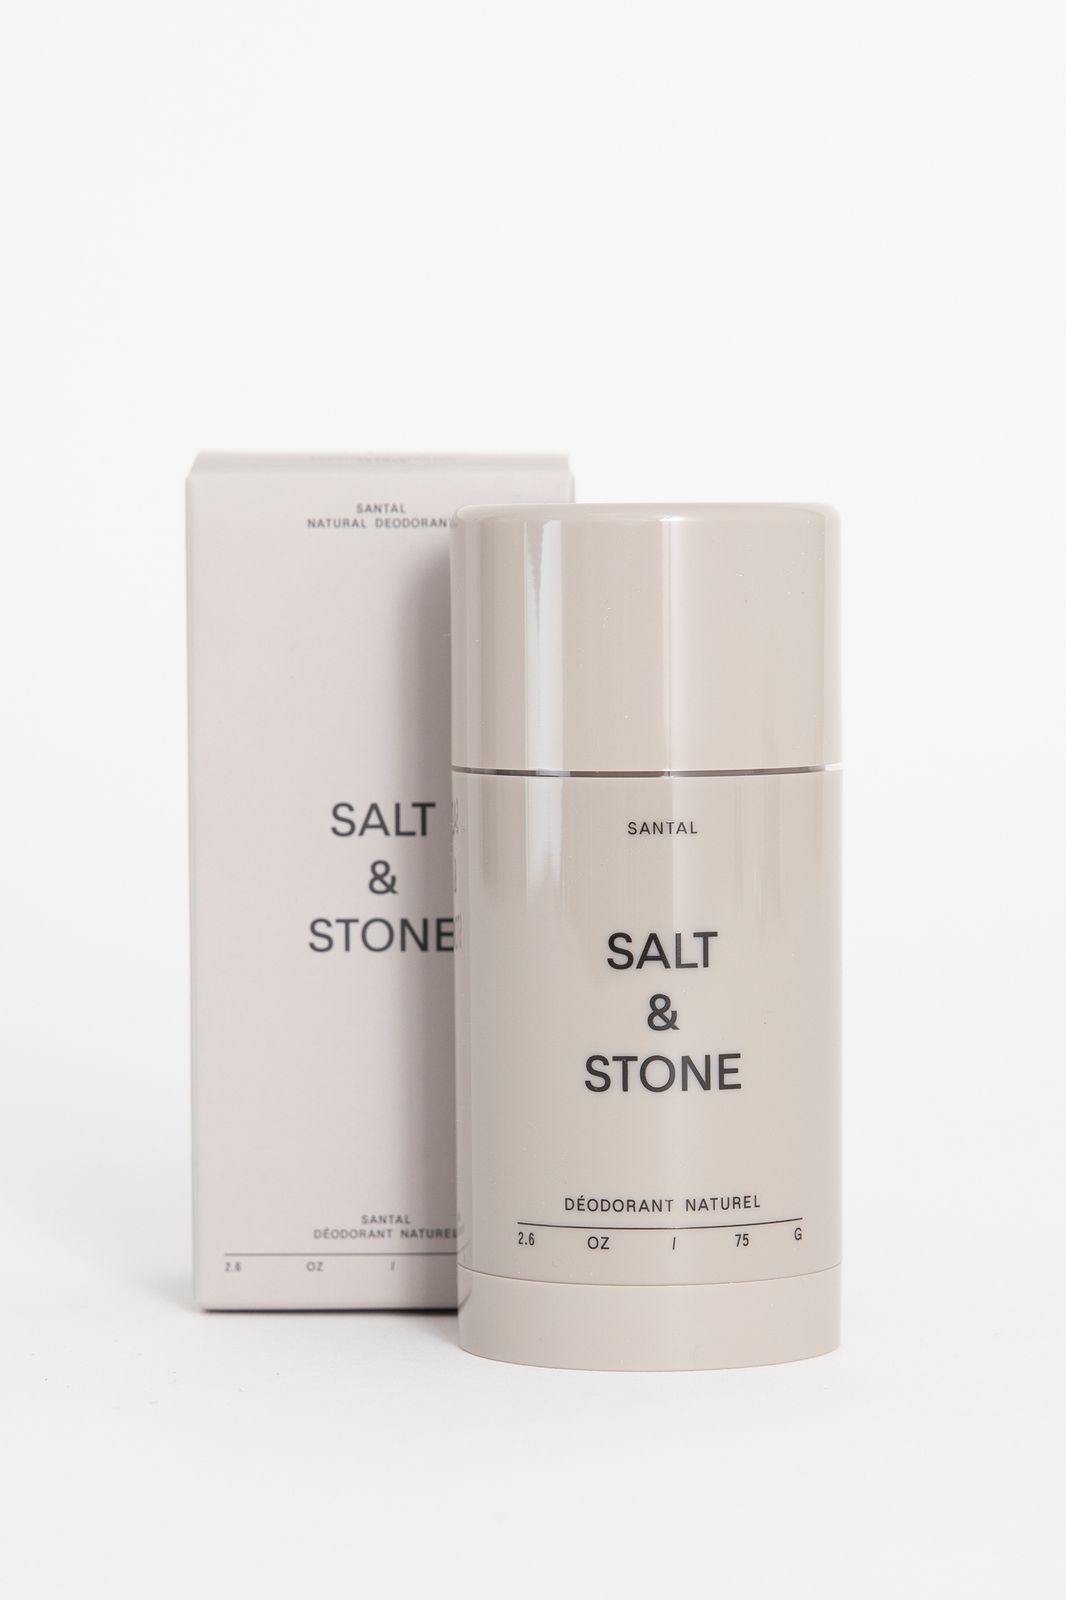 Salt & Stone Deodorant Santal - Formula Nº 1